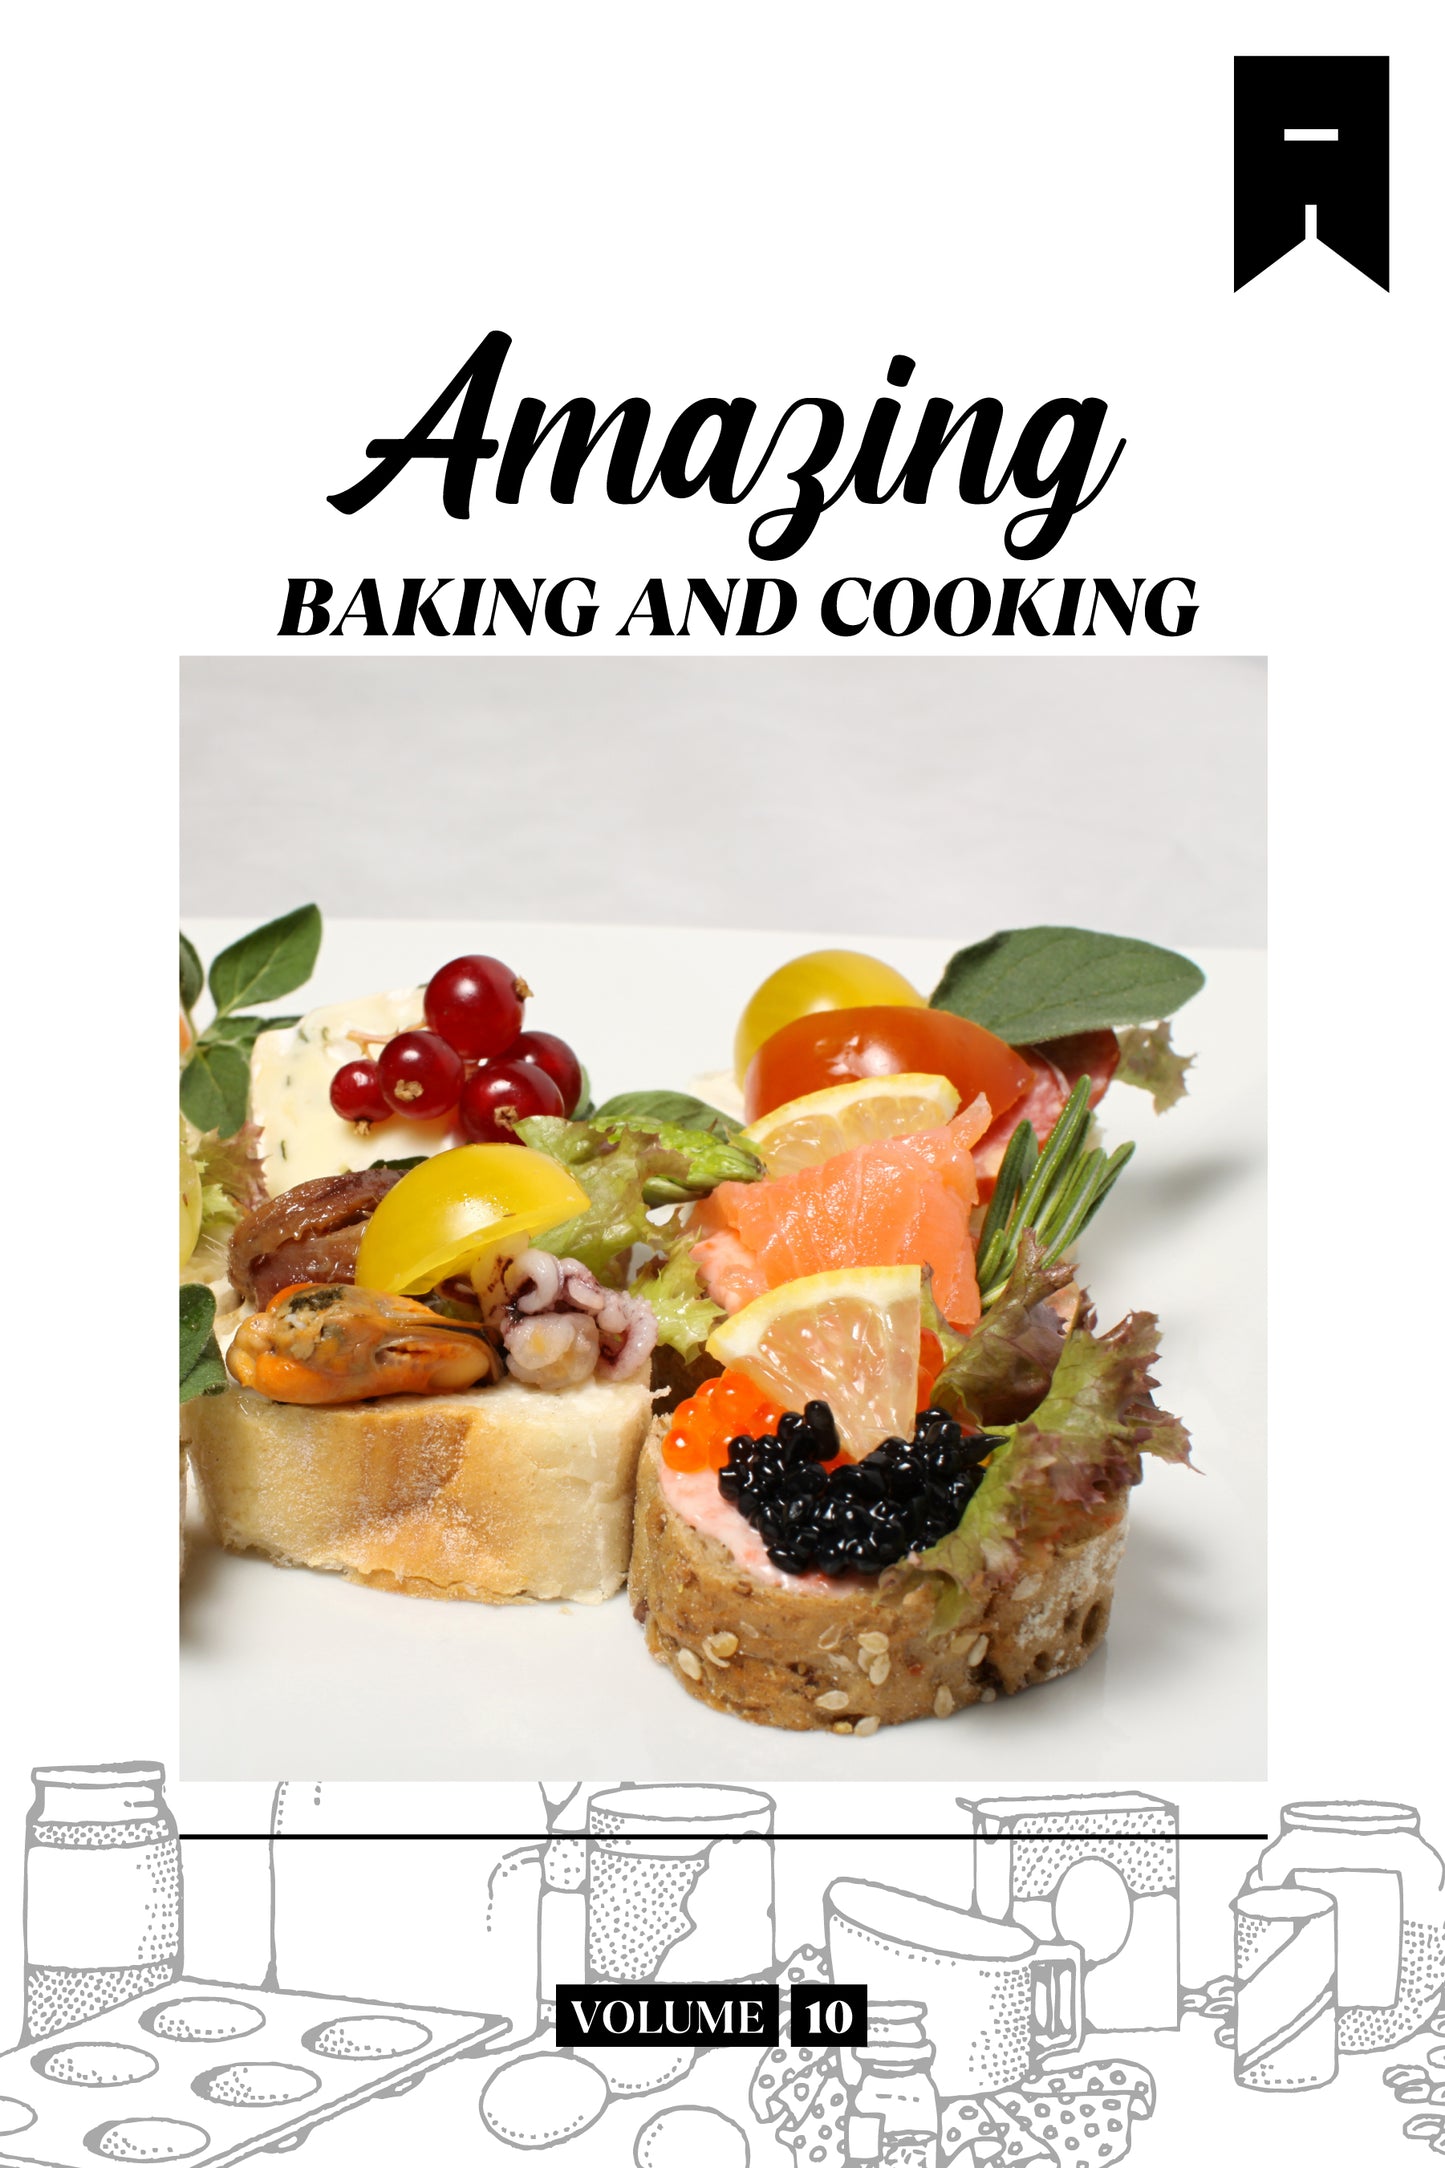 Amazing Baking (Volume 10) - Physical Book